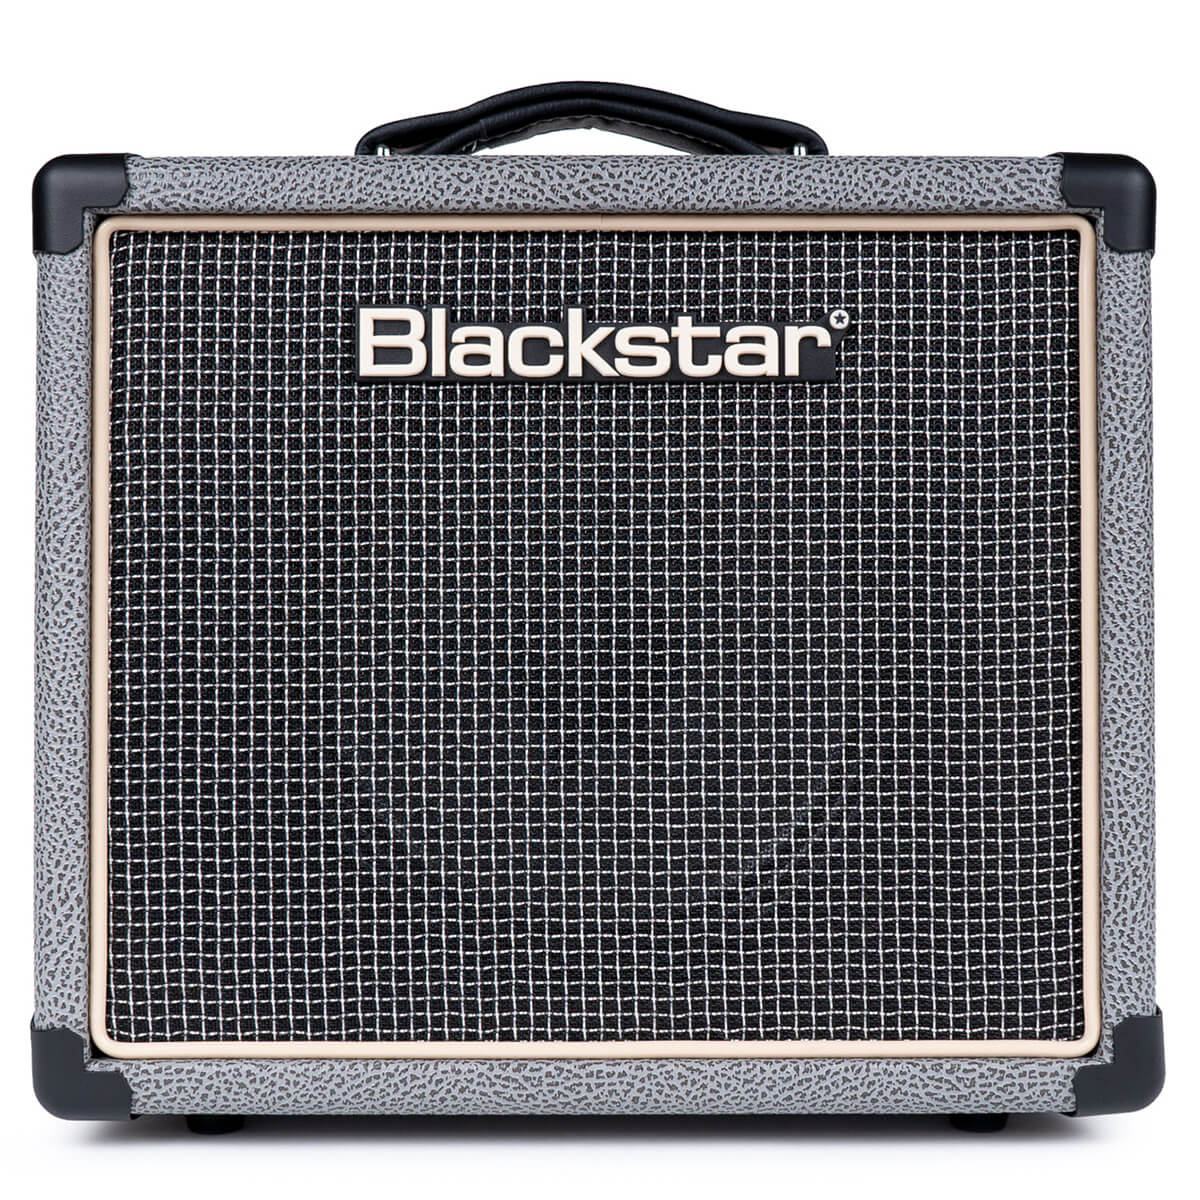 Blackstar HT1R MkII 1x8" 1-watt Tube Combo Amp with Reverb - Bronco Grey